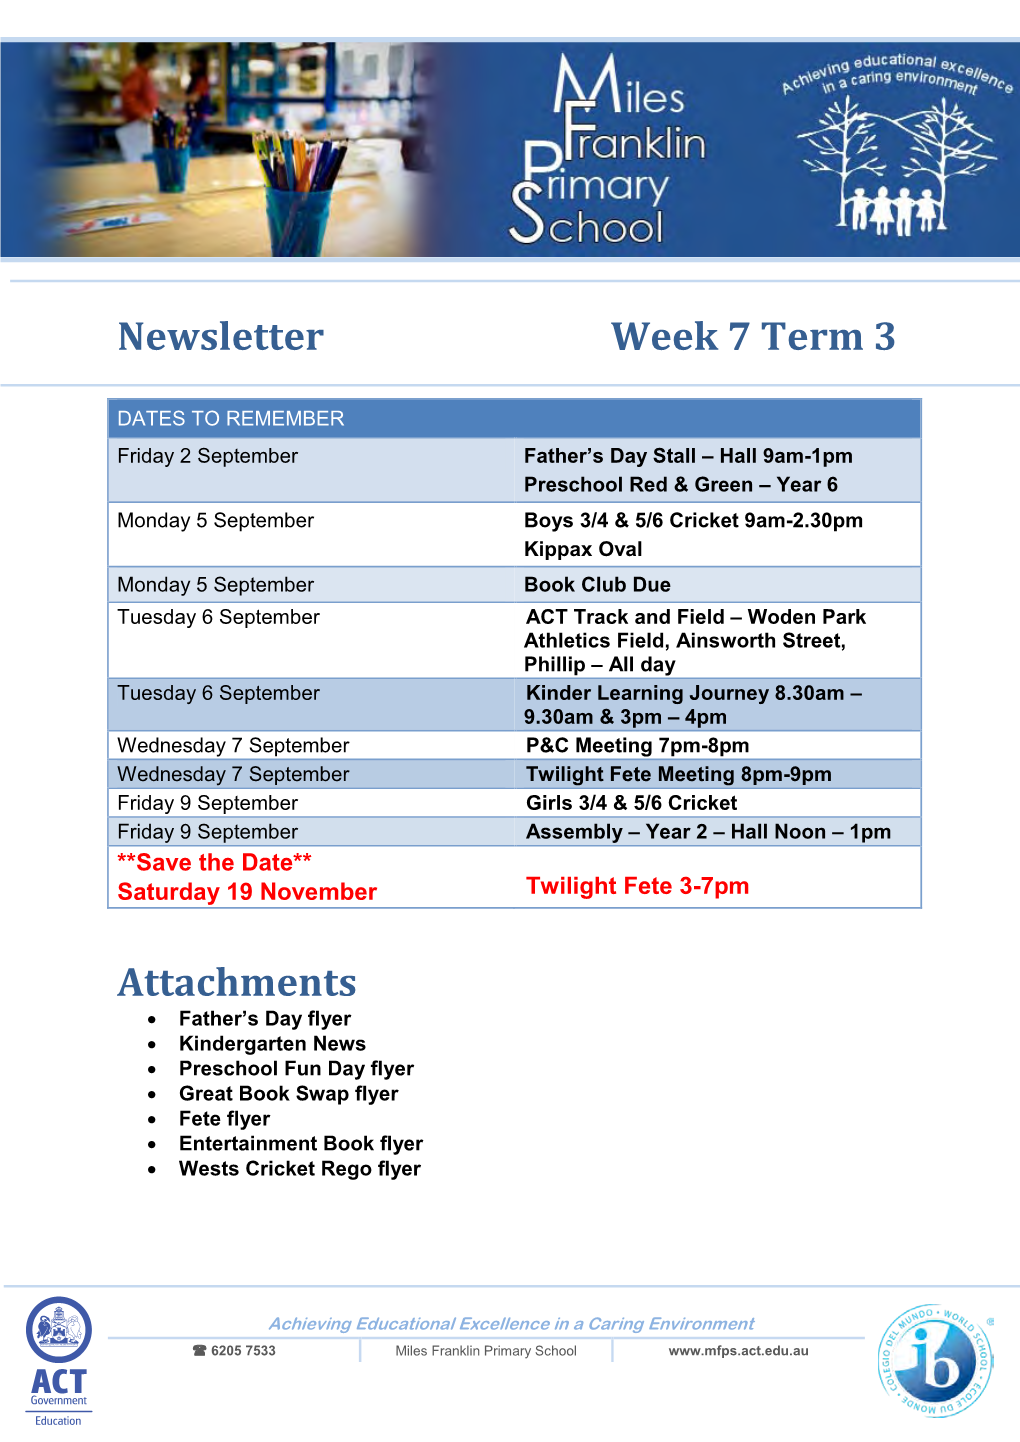 Newsletter Week 7 Term 3 Attachments